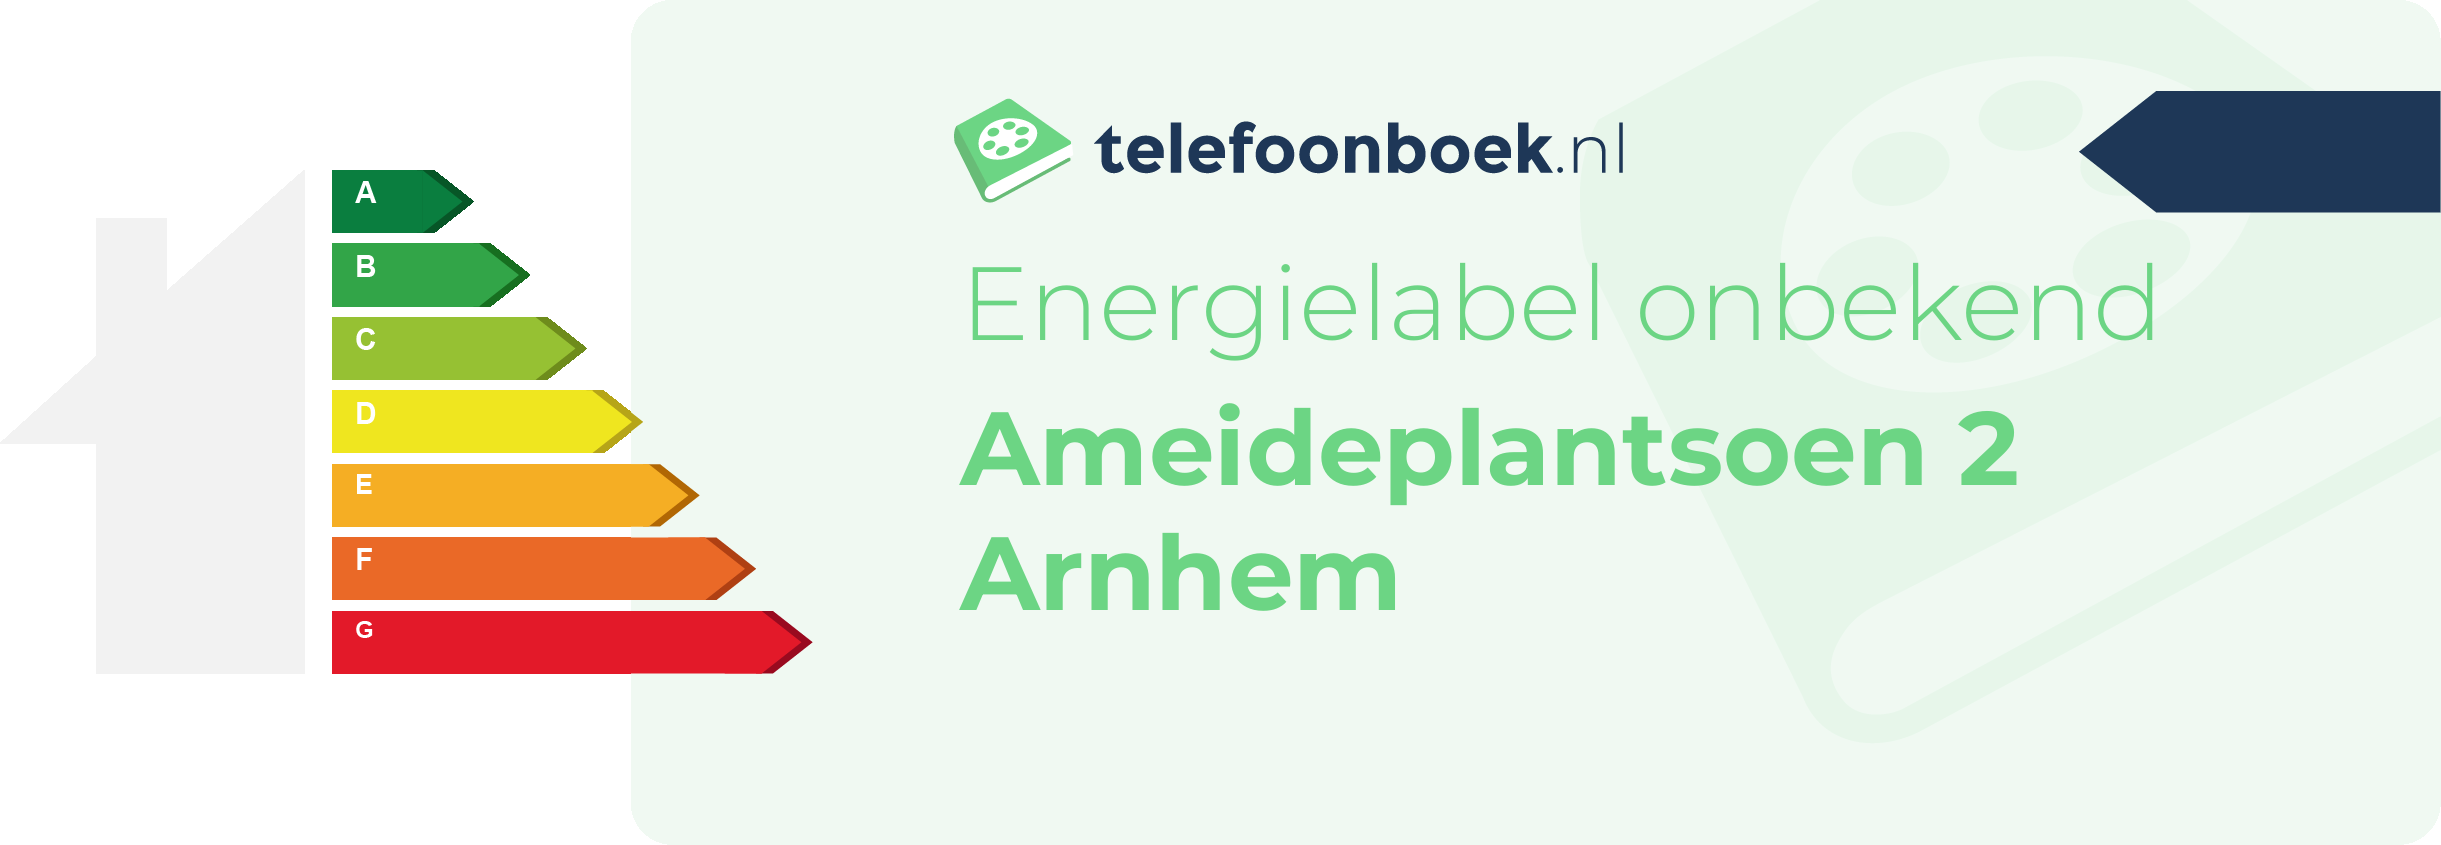 Energielabel Ameideplantsoen 2 Arnhem